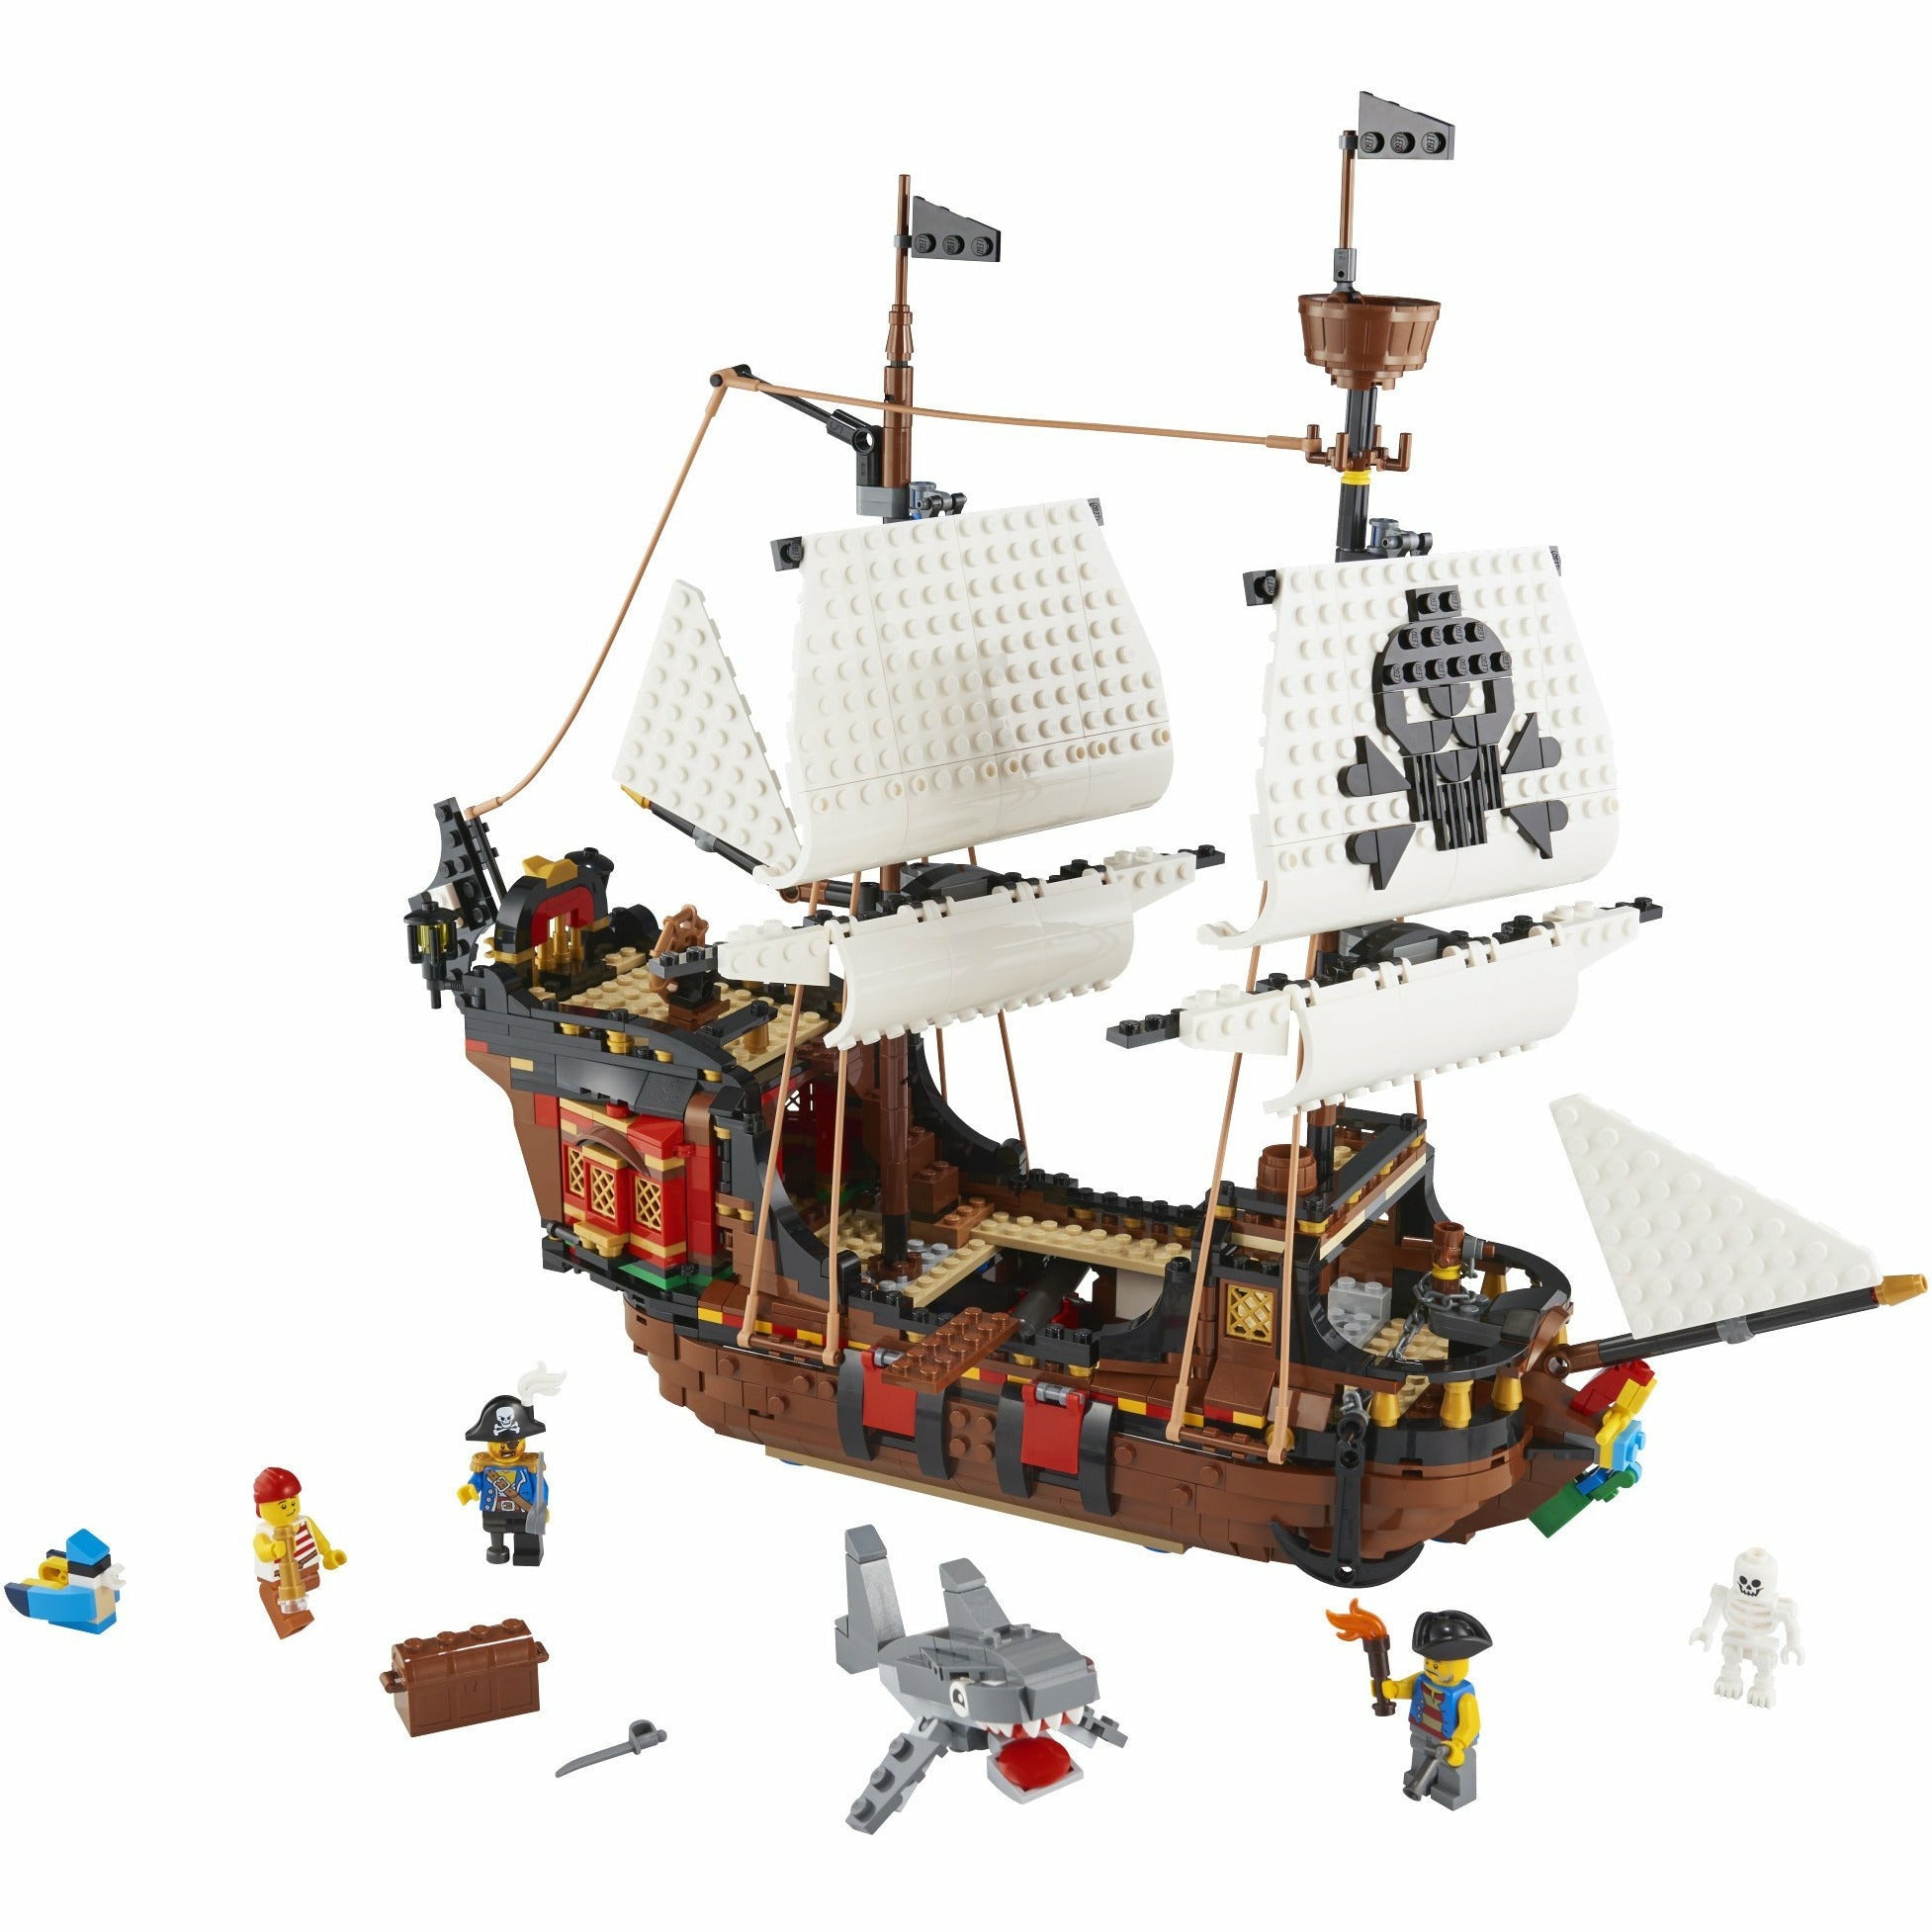 Lego® | 31109 | Piratenschiff